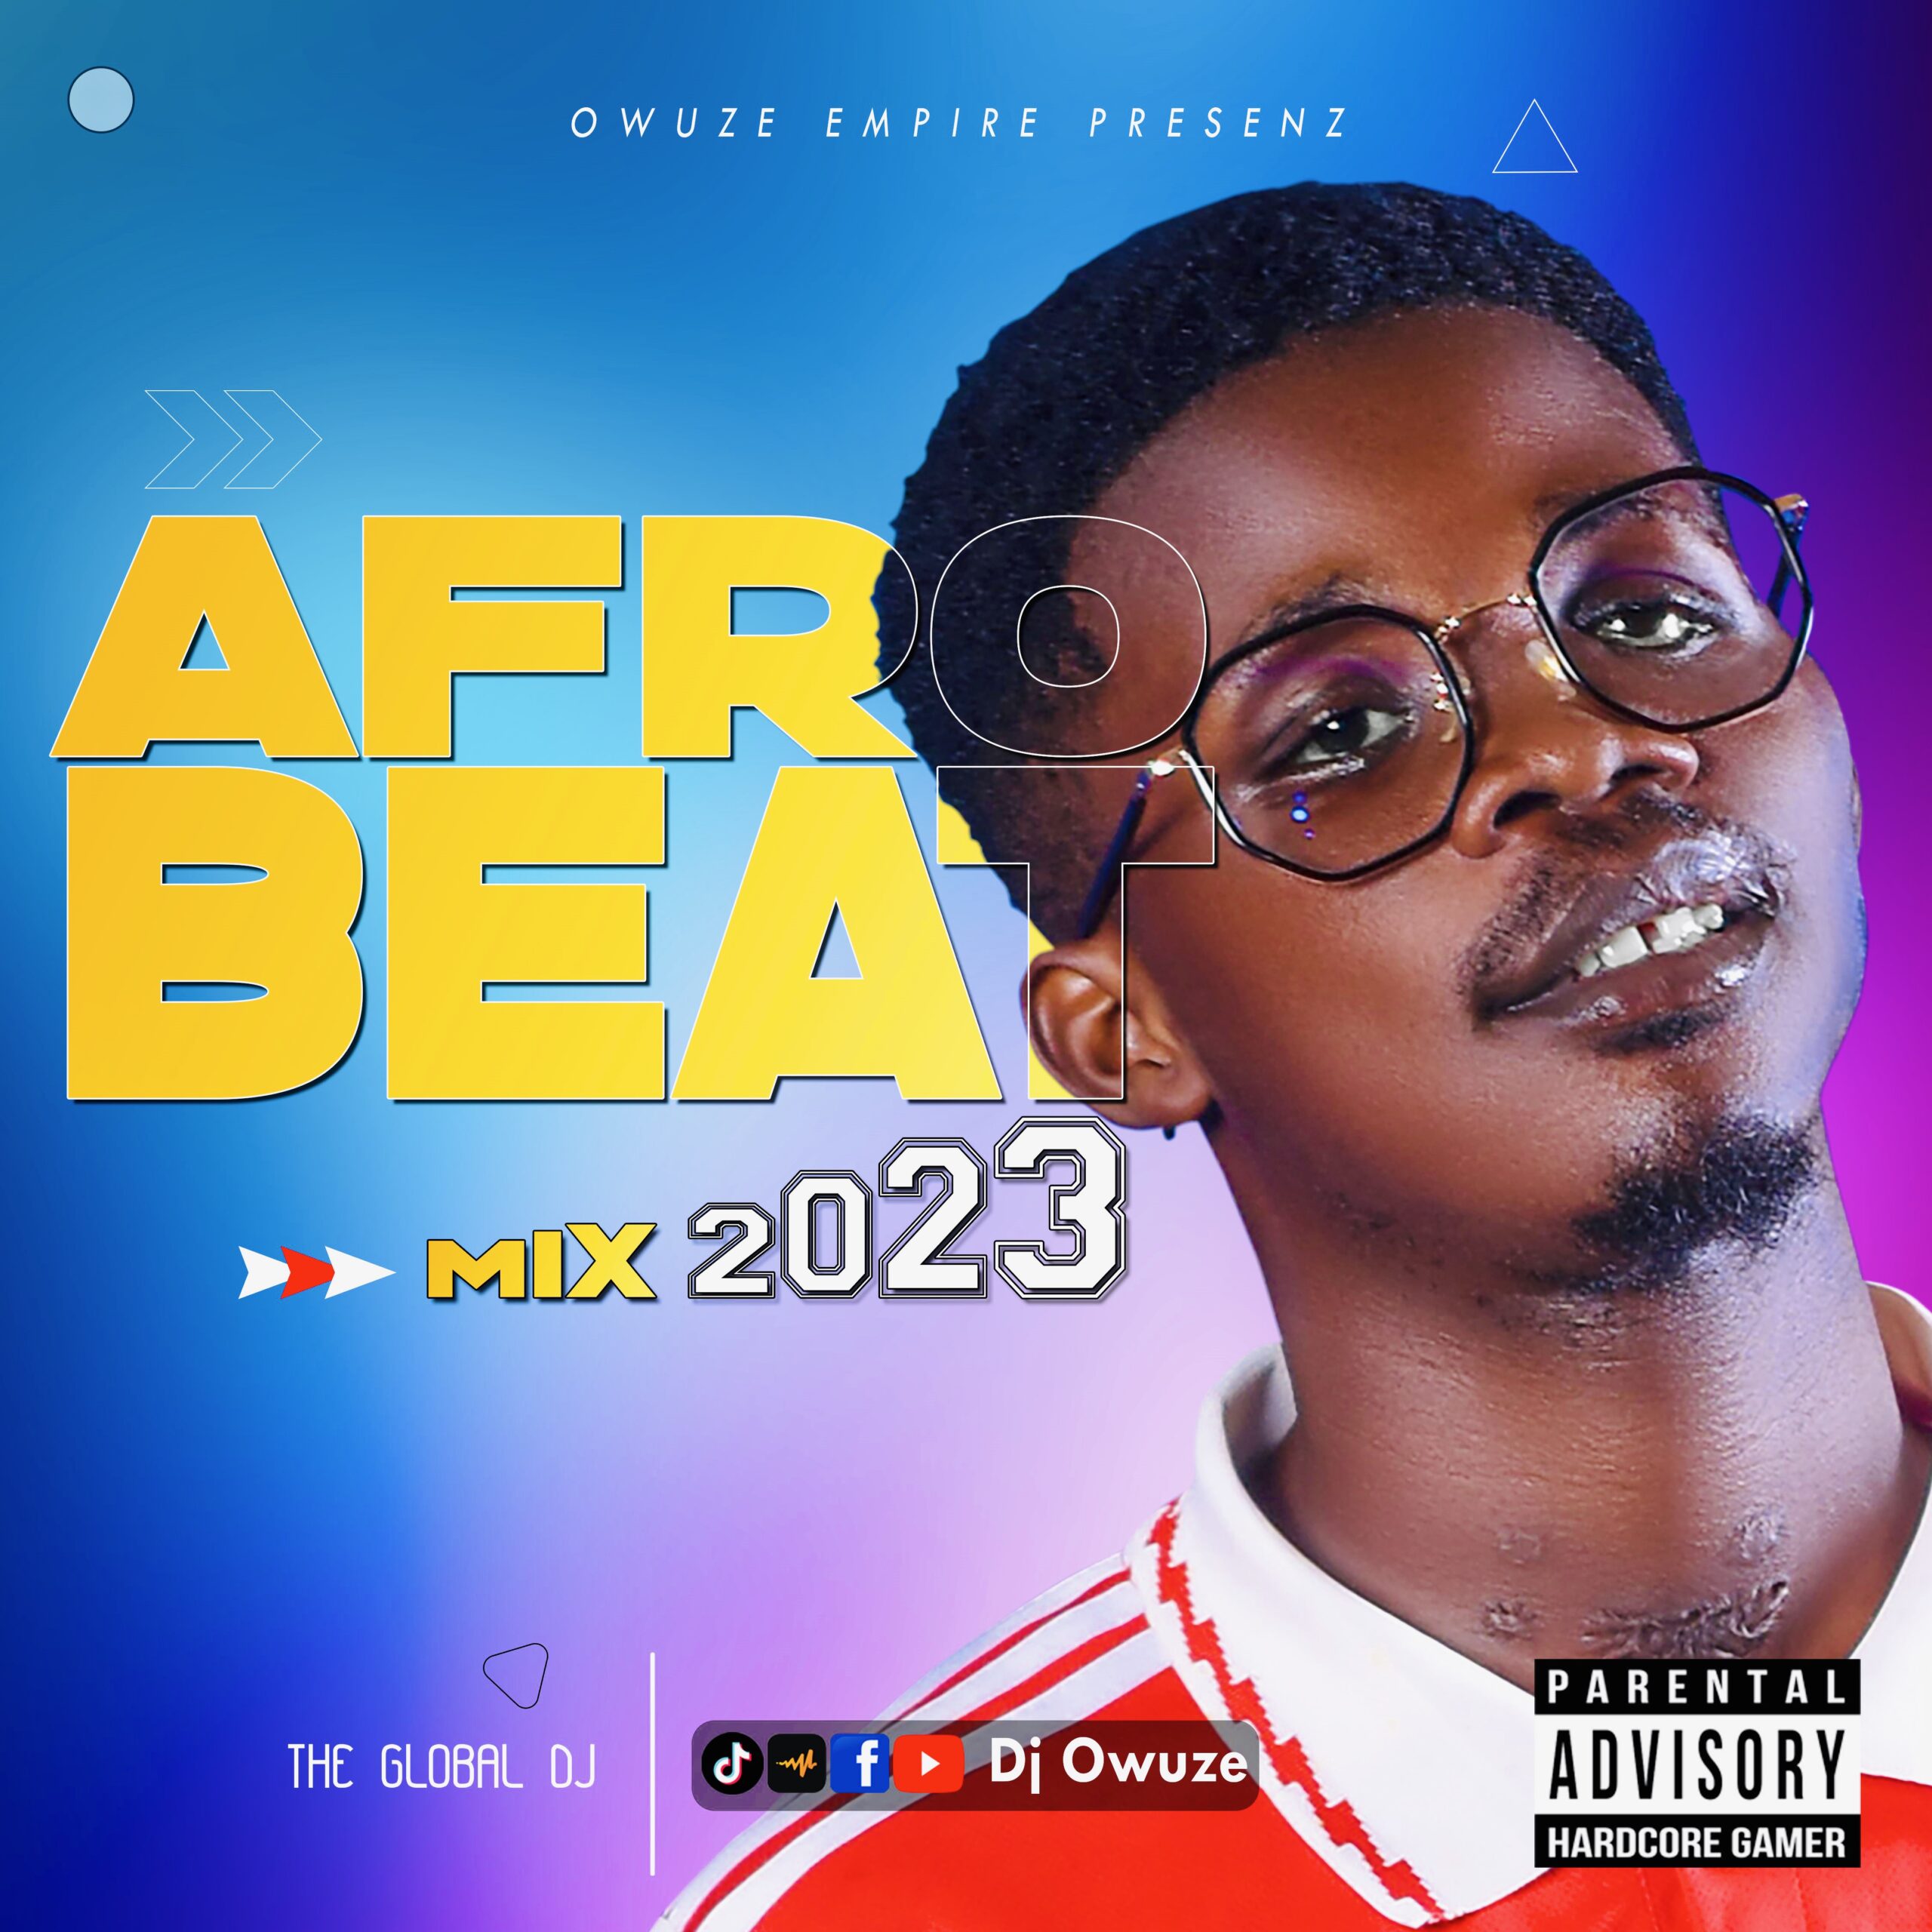 DOWNLOAD DJ Owuze Afrobeat Mix 2023 MP3